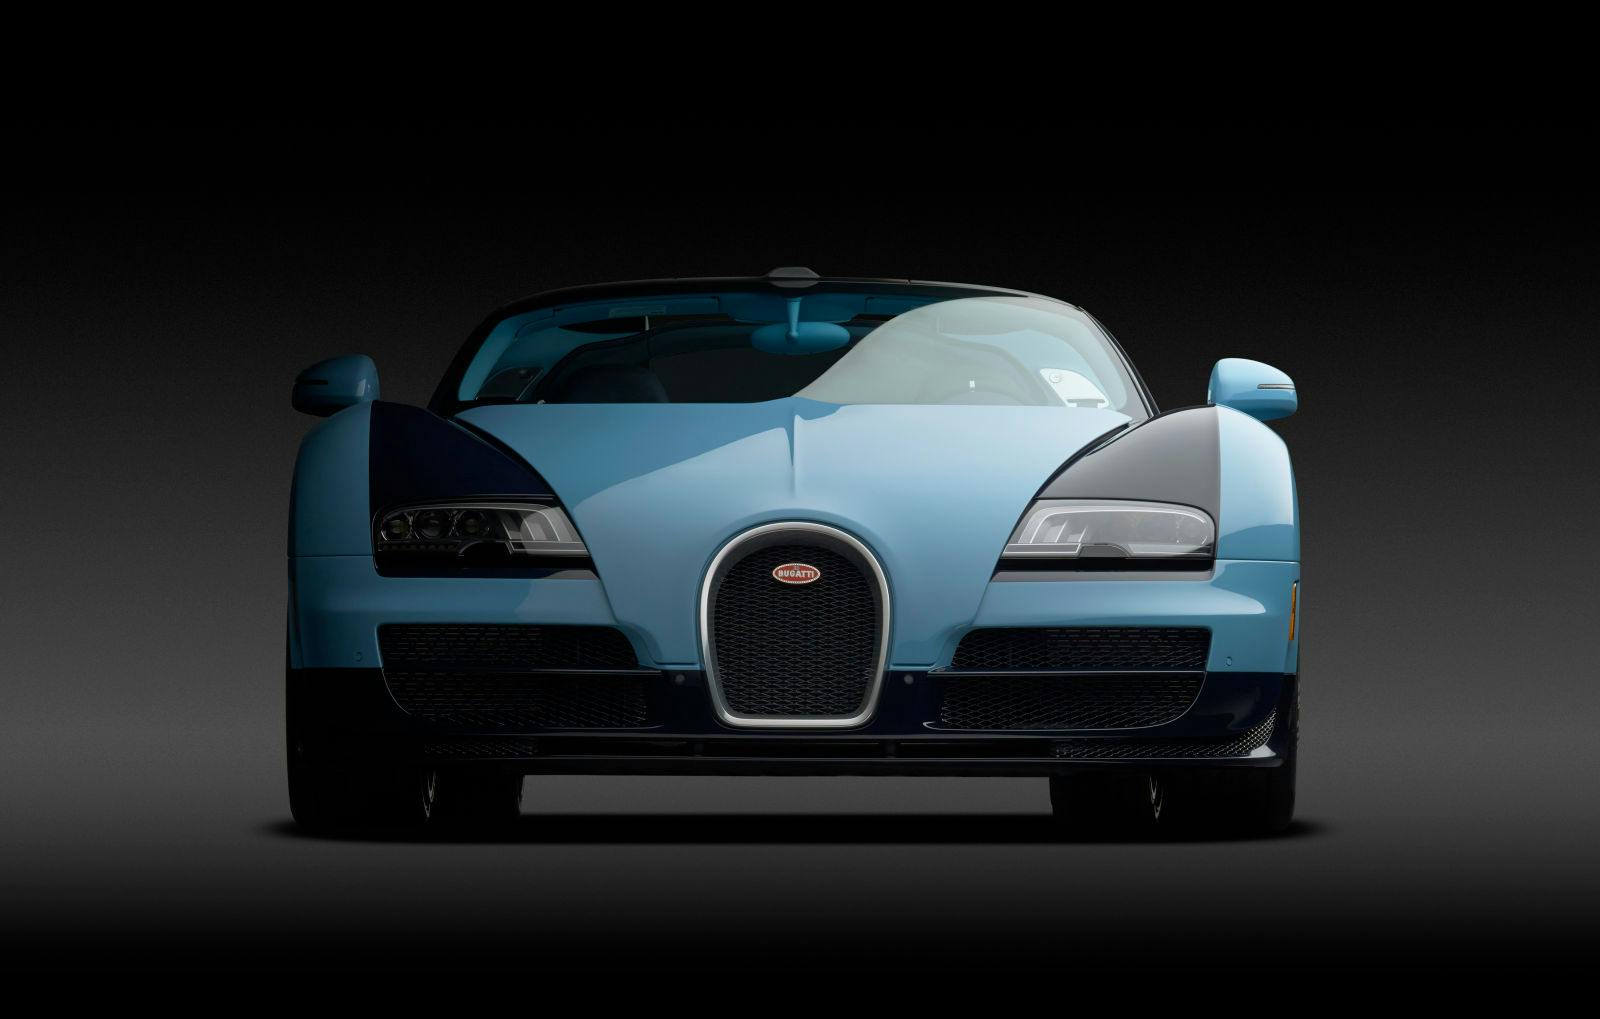 Bugatti Legend “Jean-Pierre Wimille”